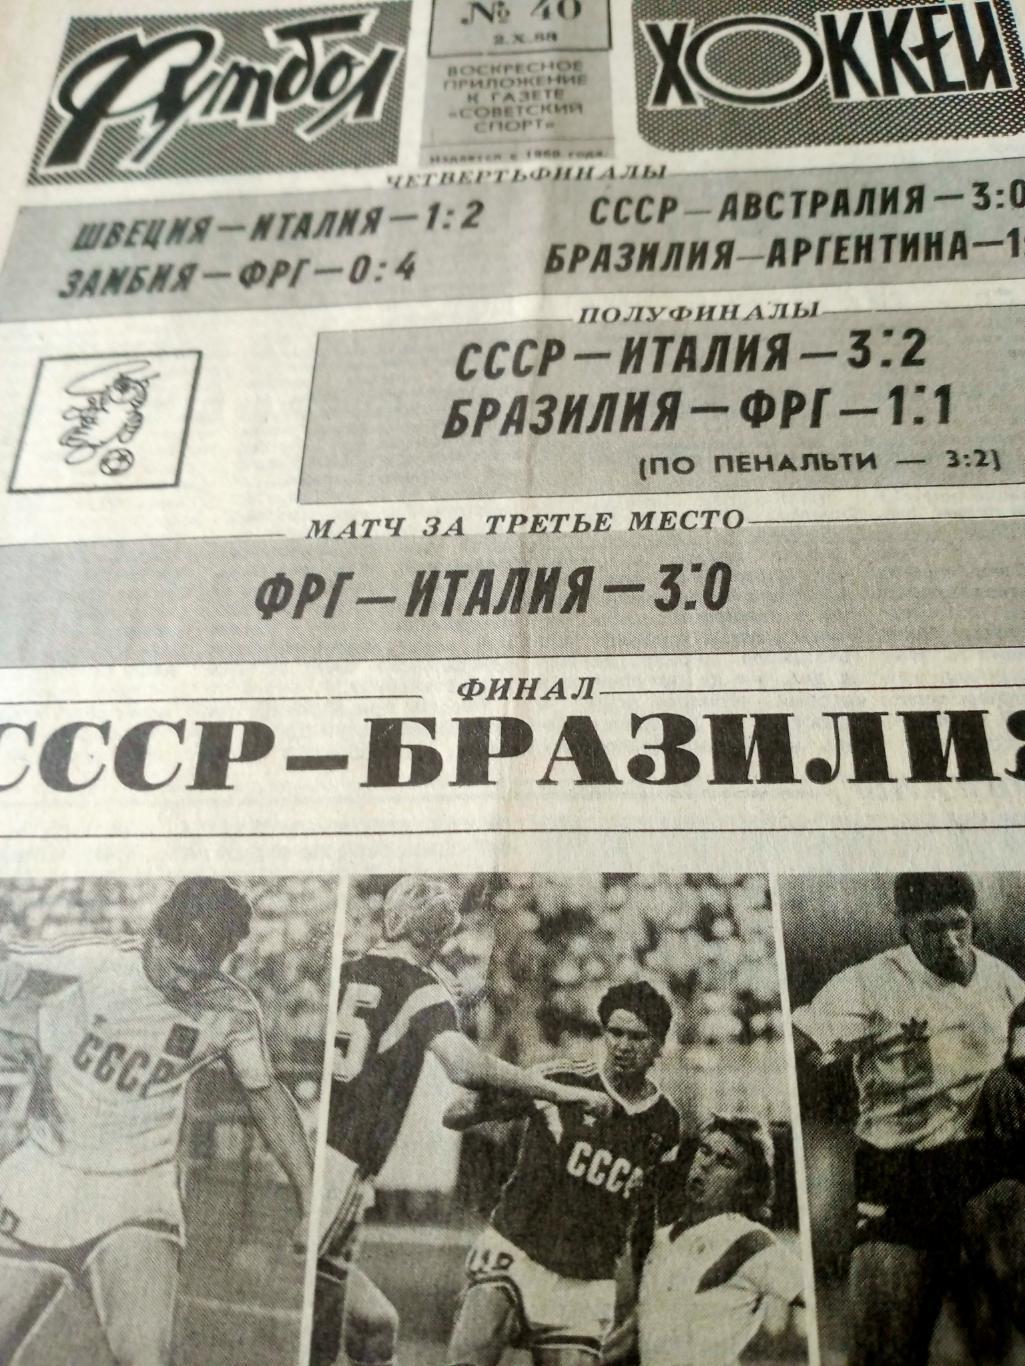 Олимпиада. СССР - Бразилия. Футбол - Хоккей. 1988 год, №40